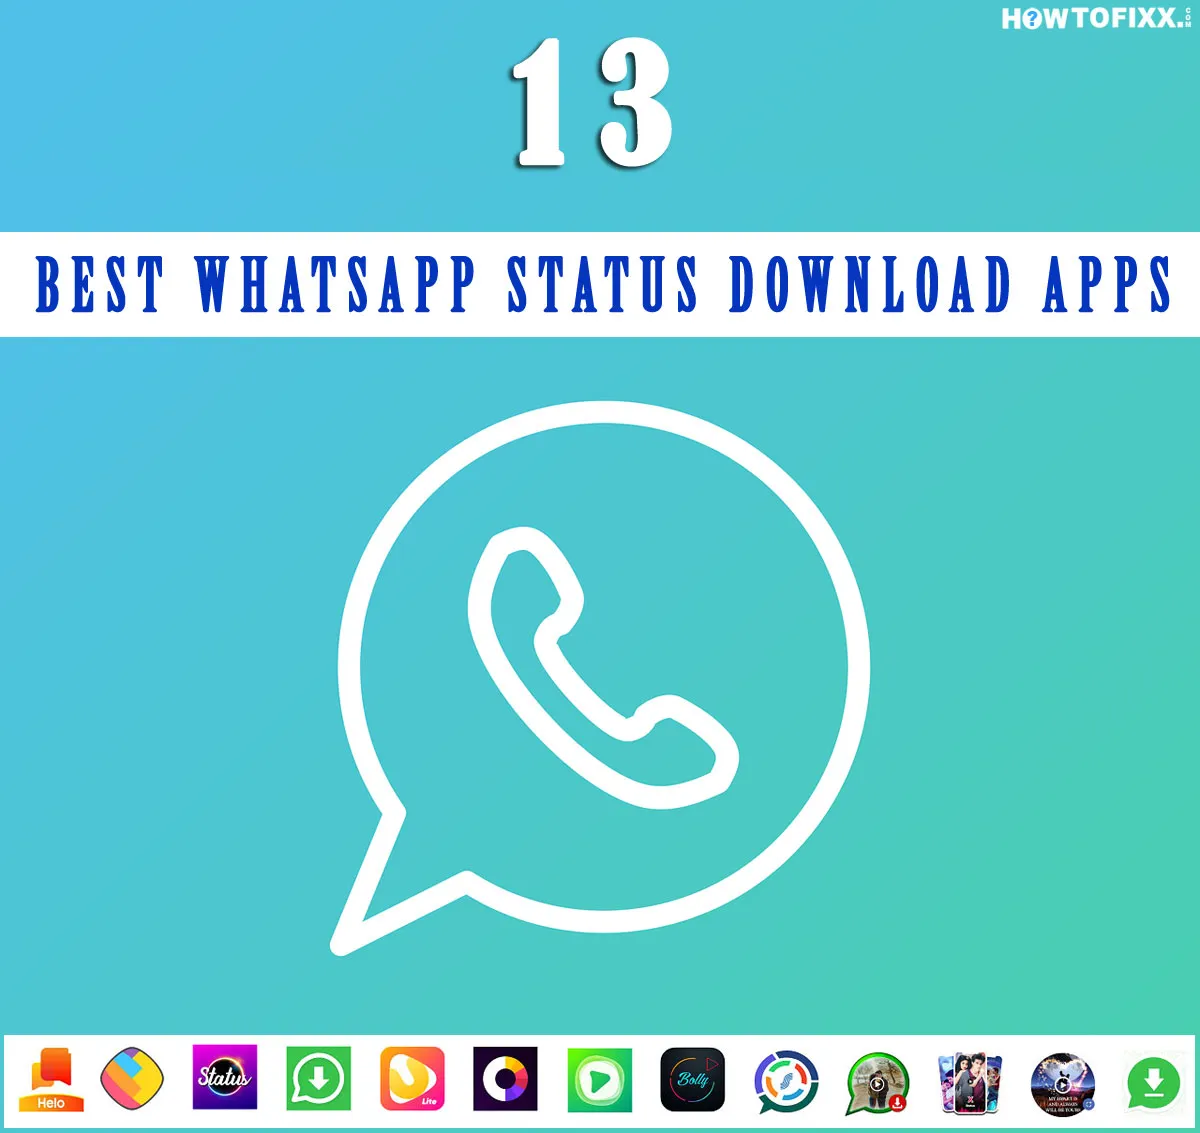 Best Whatsapp Status Apps